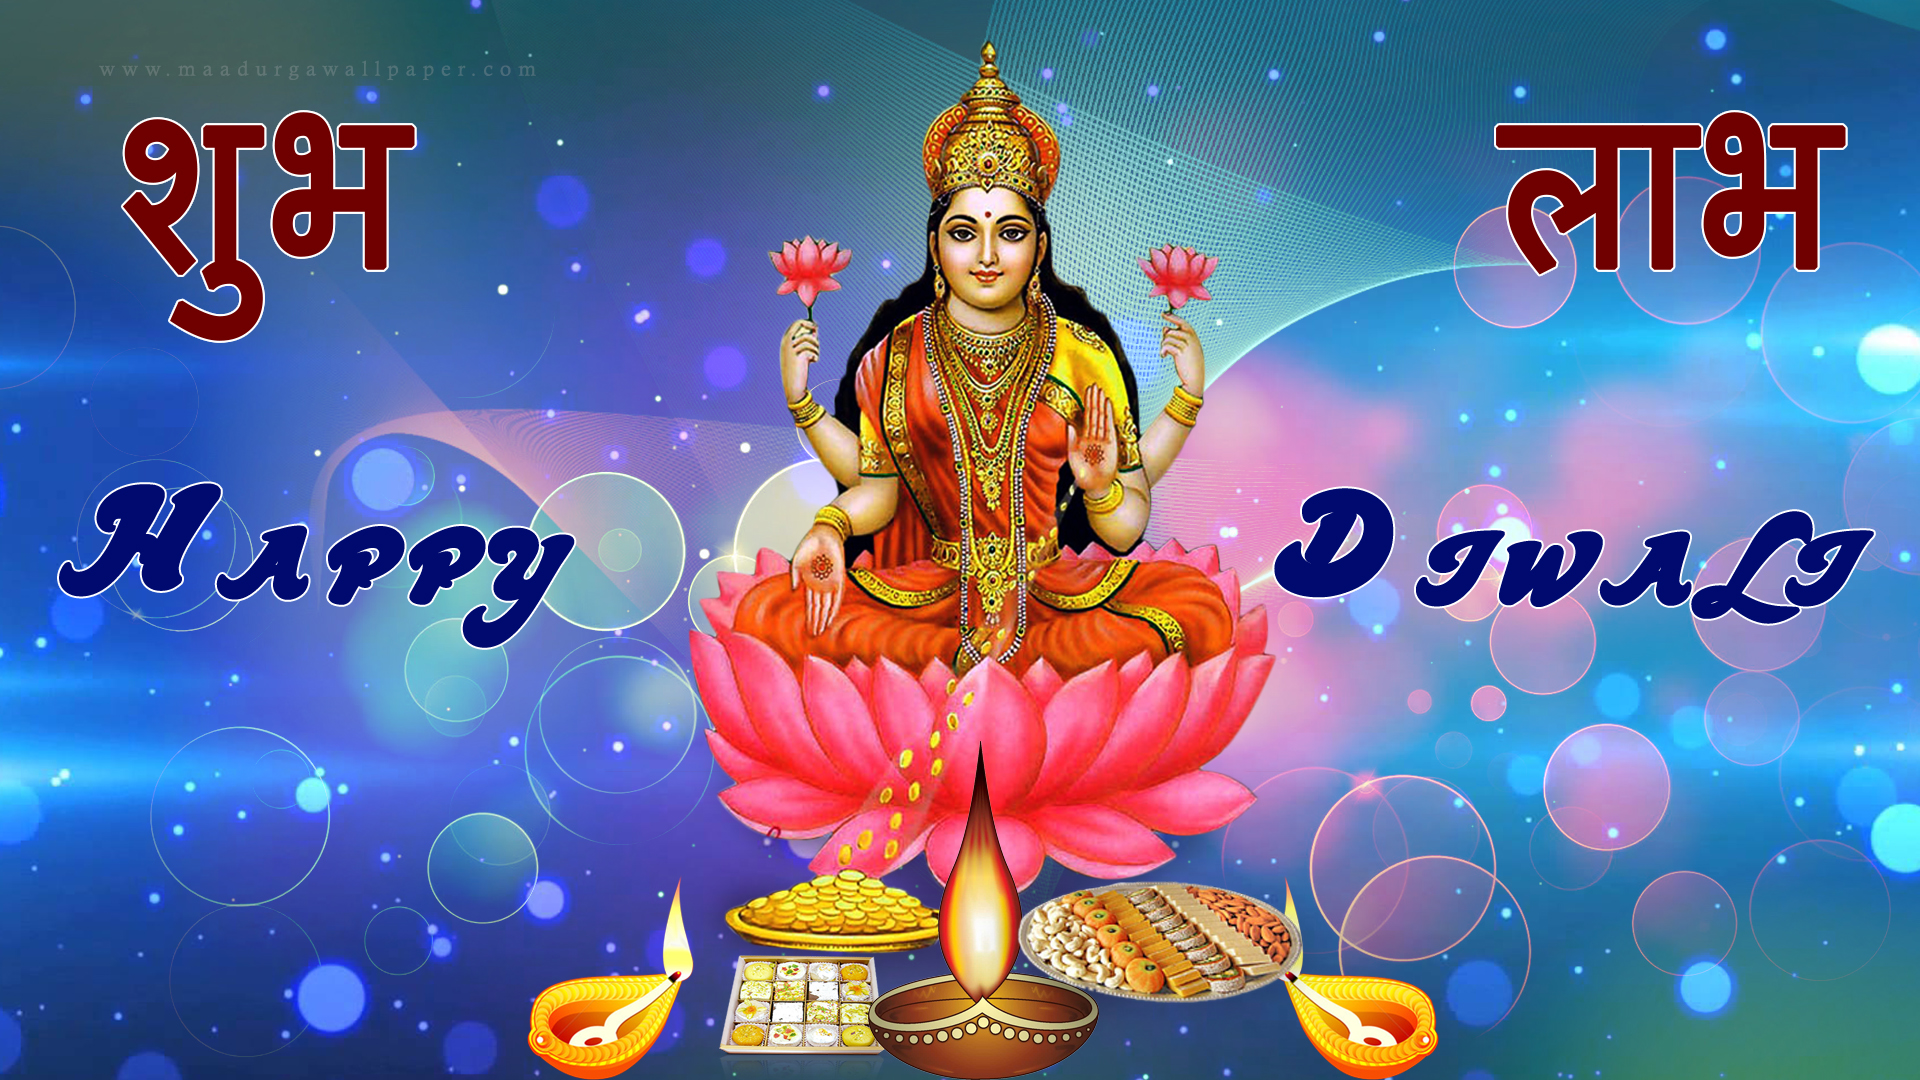 Lakshmi devi images free download